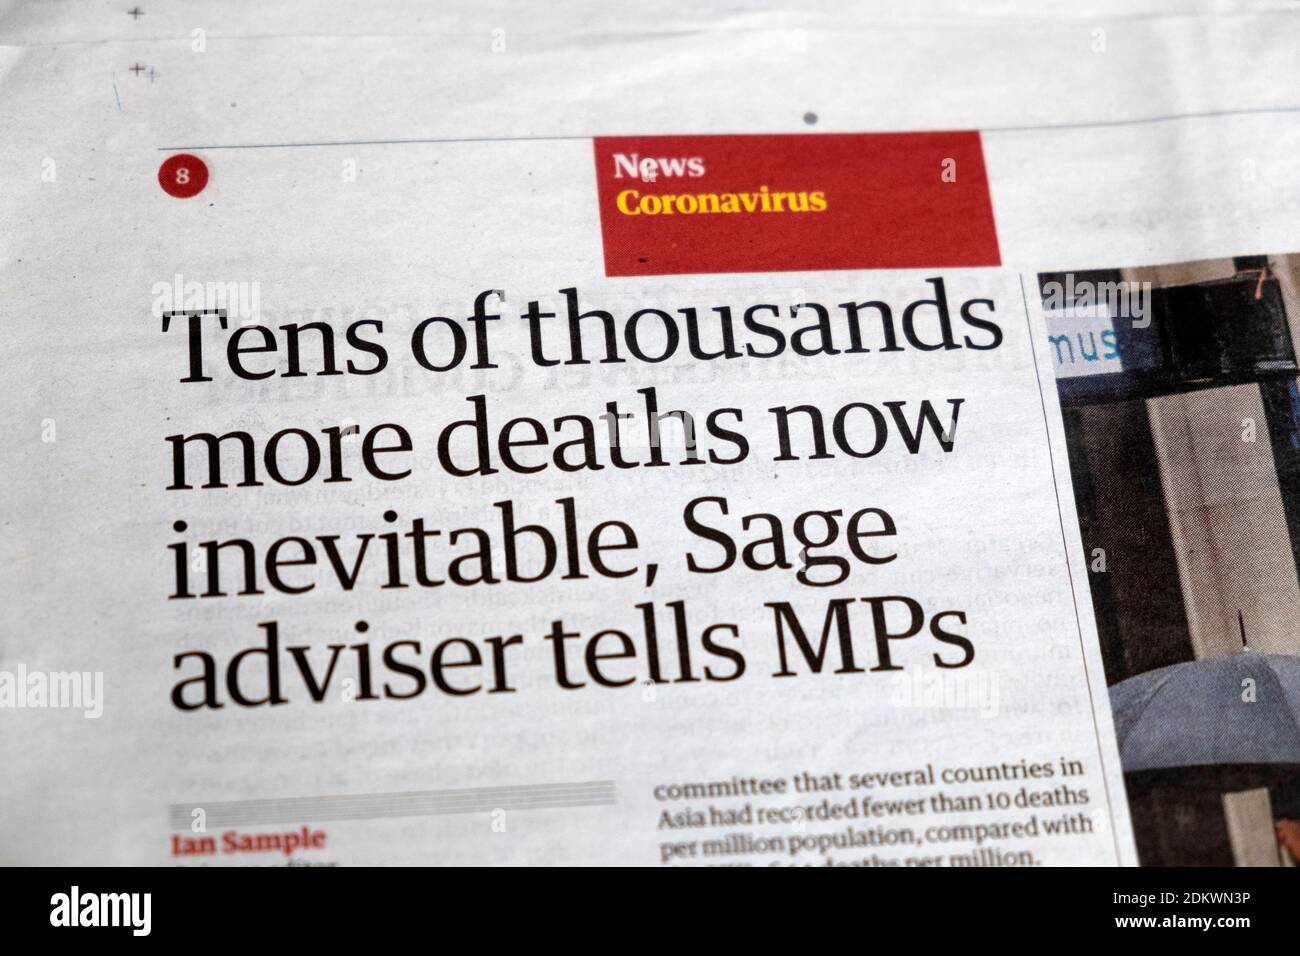 Coronavirus 'Tens of thousands more deaths inevitable, Sage adviser tells MPs' Covid second wave Guardian newspaper headline 21 October London UK 2020 Stock Photo